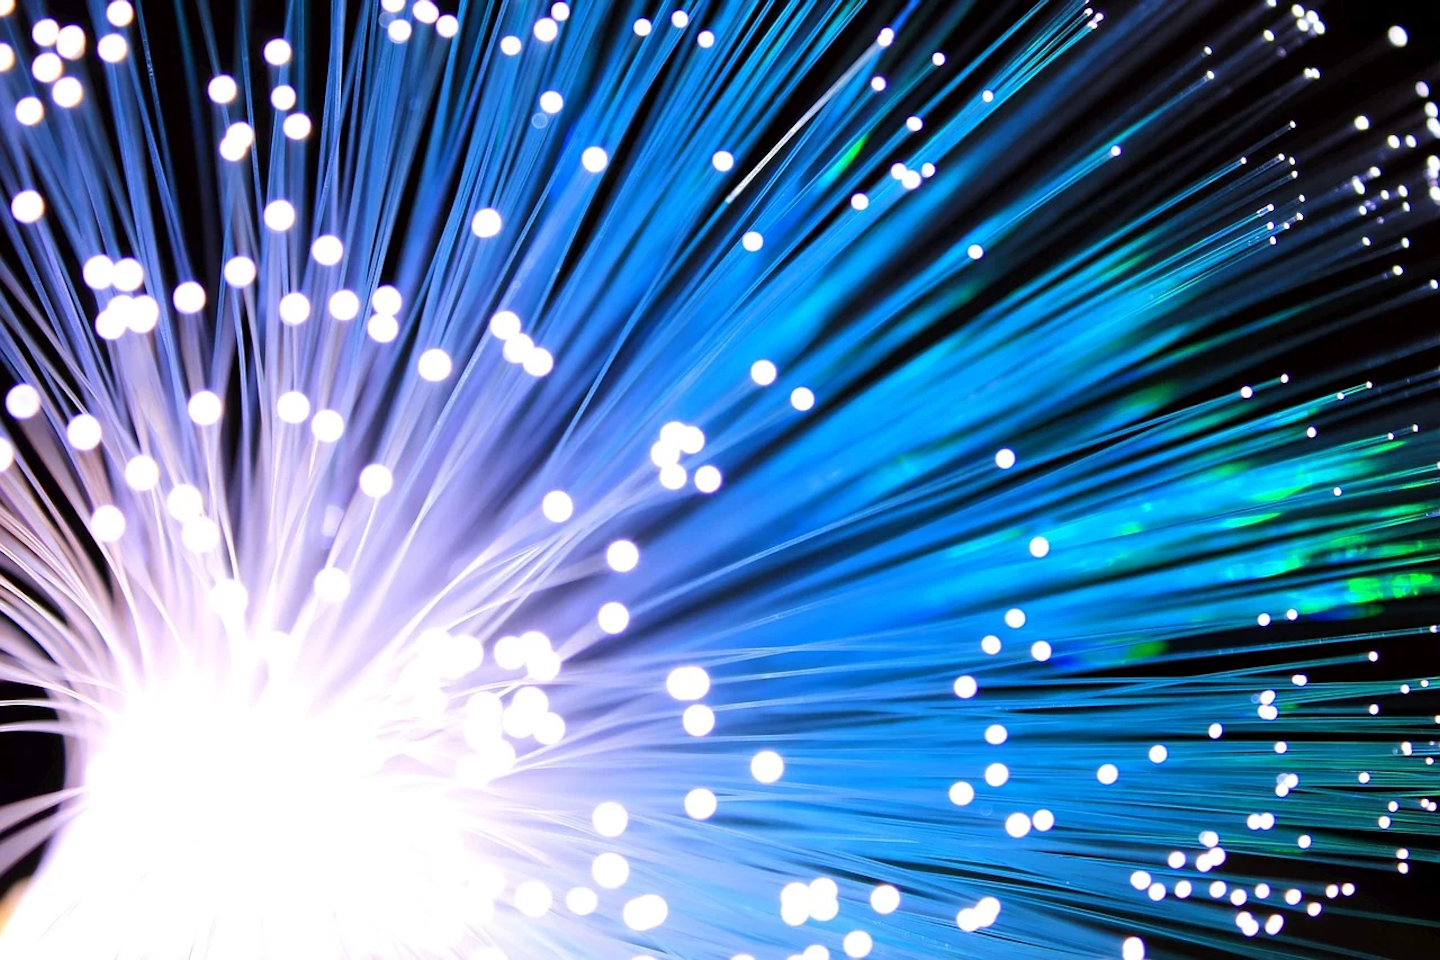 Sparklight Business launches optical wavelength service Broadband